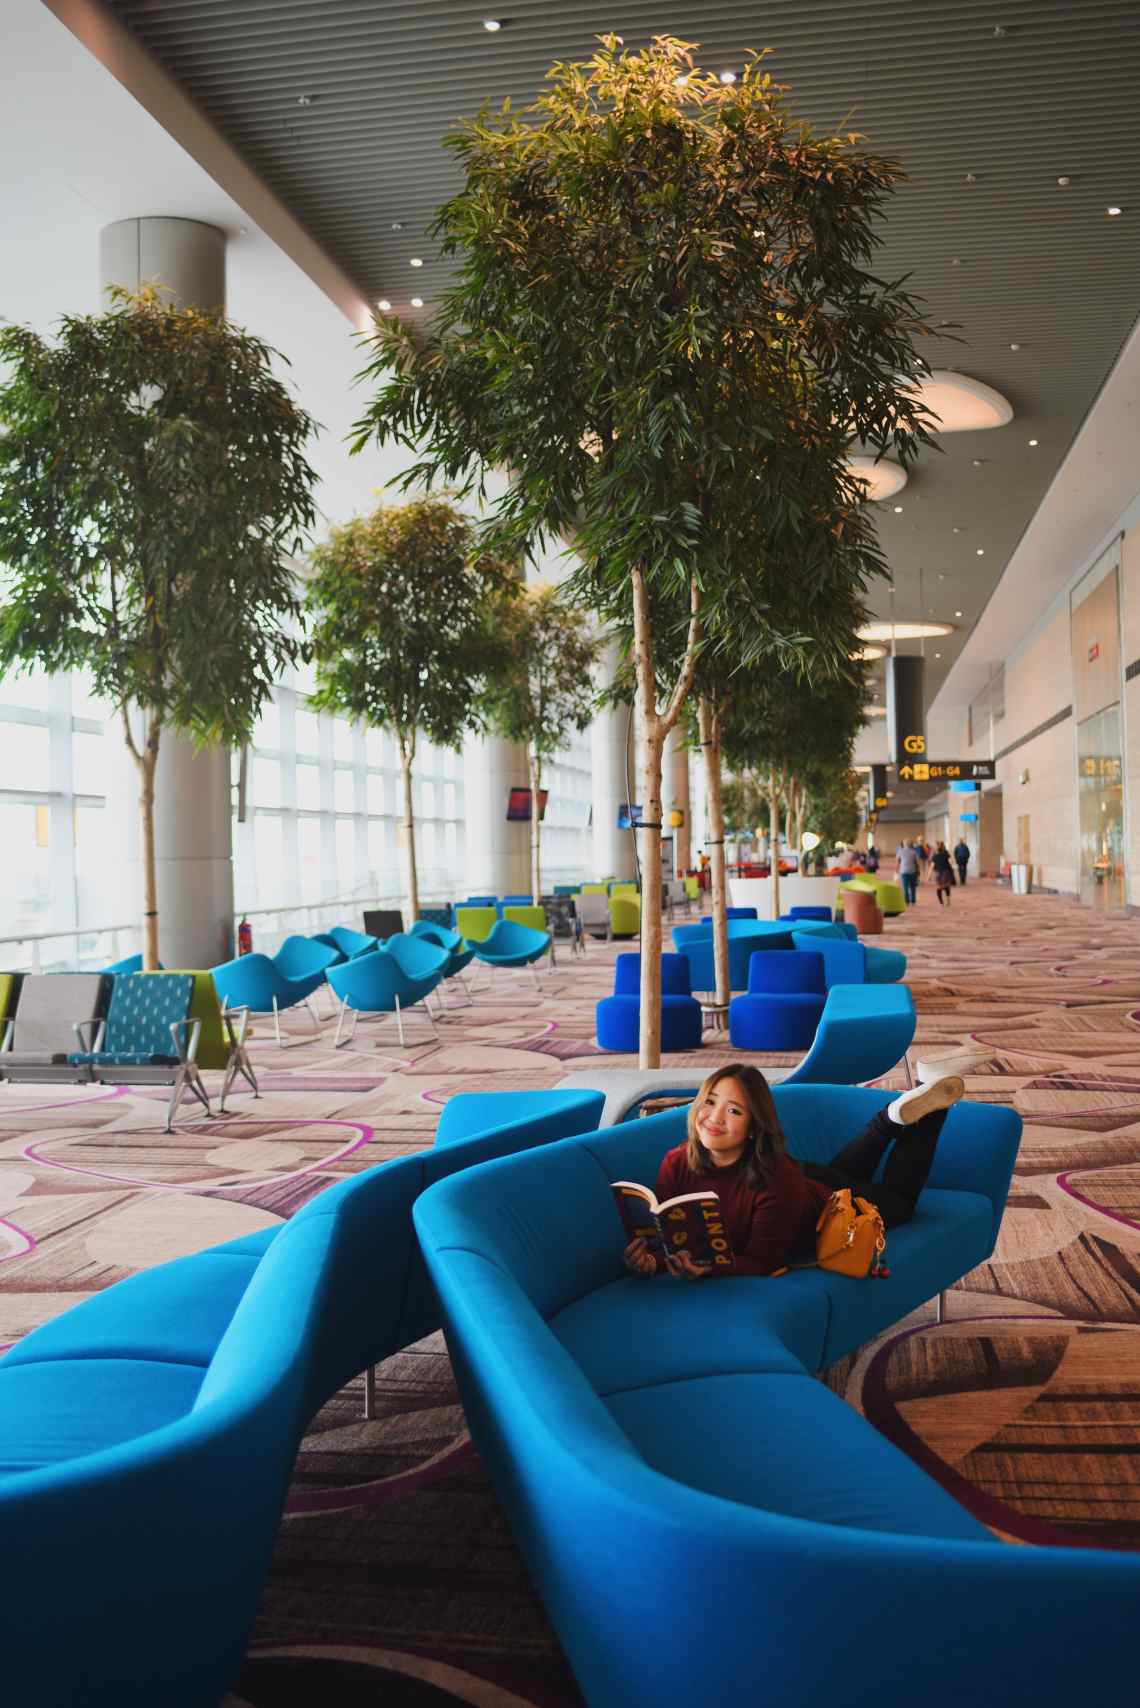 Terminal 4 seats and boulevard trees